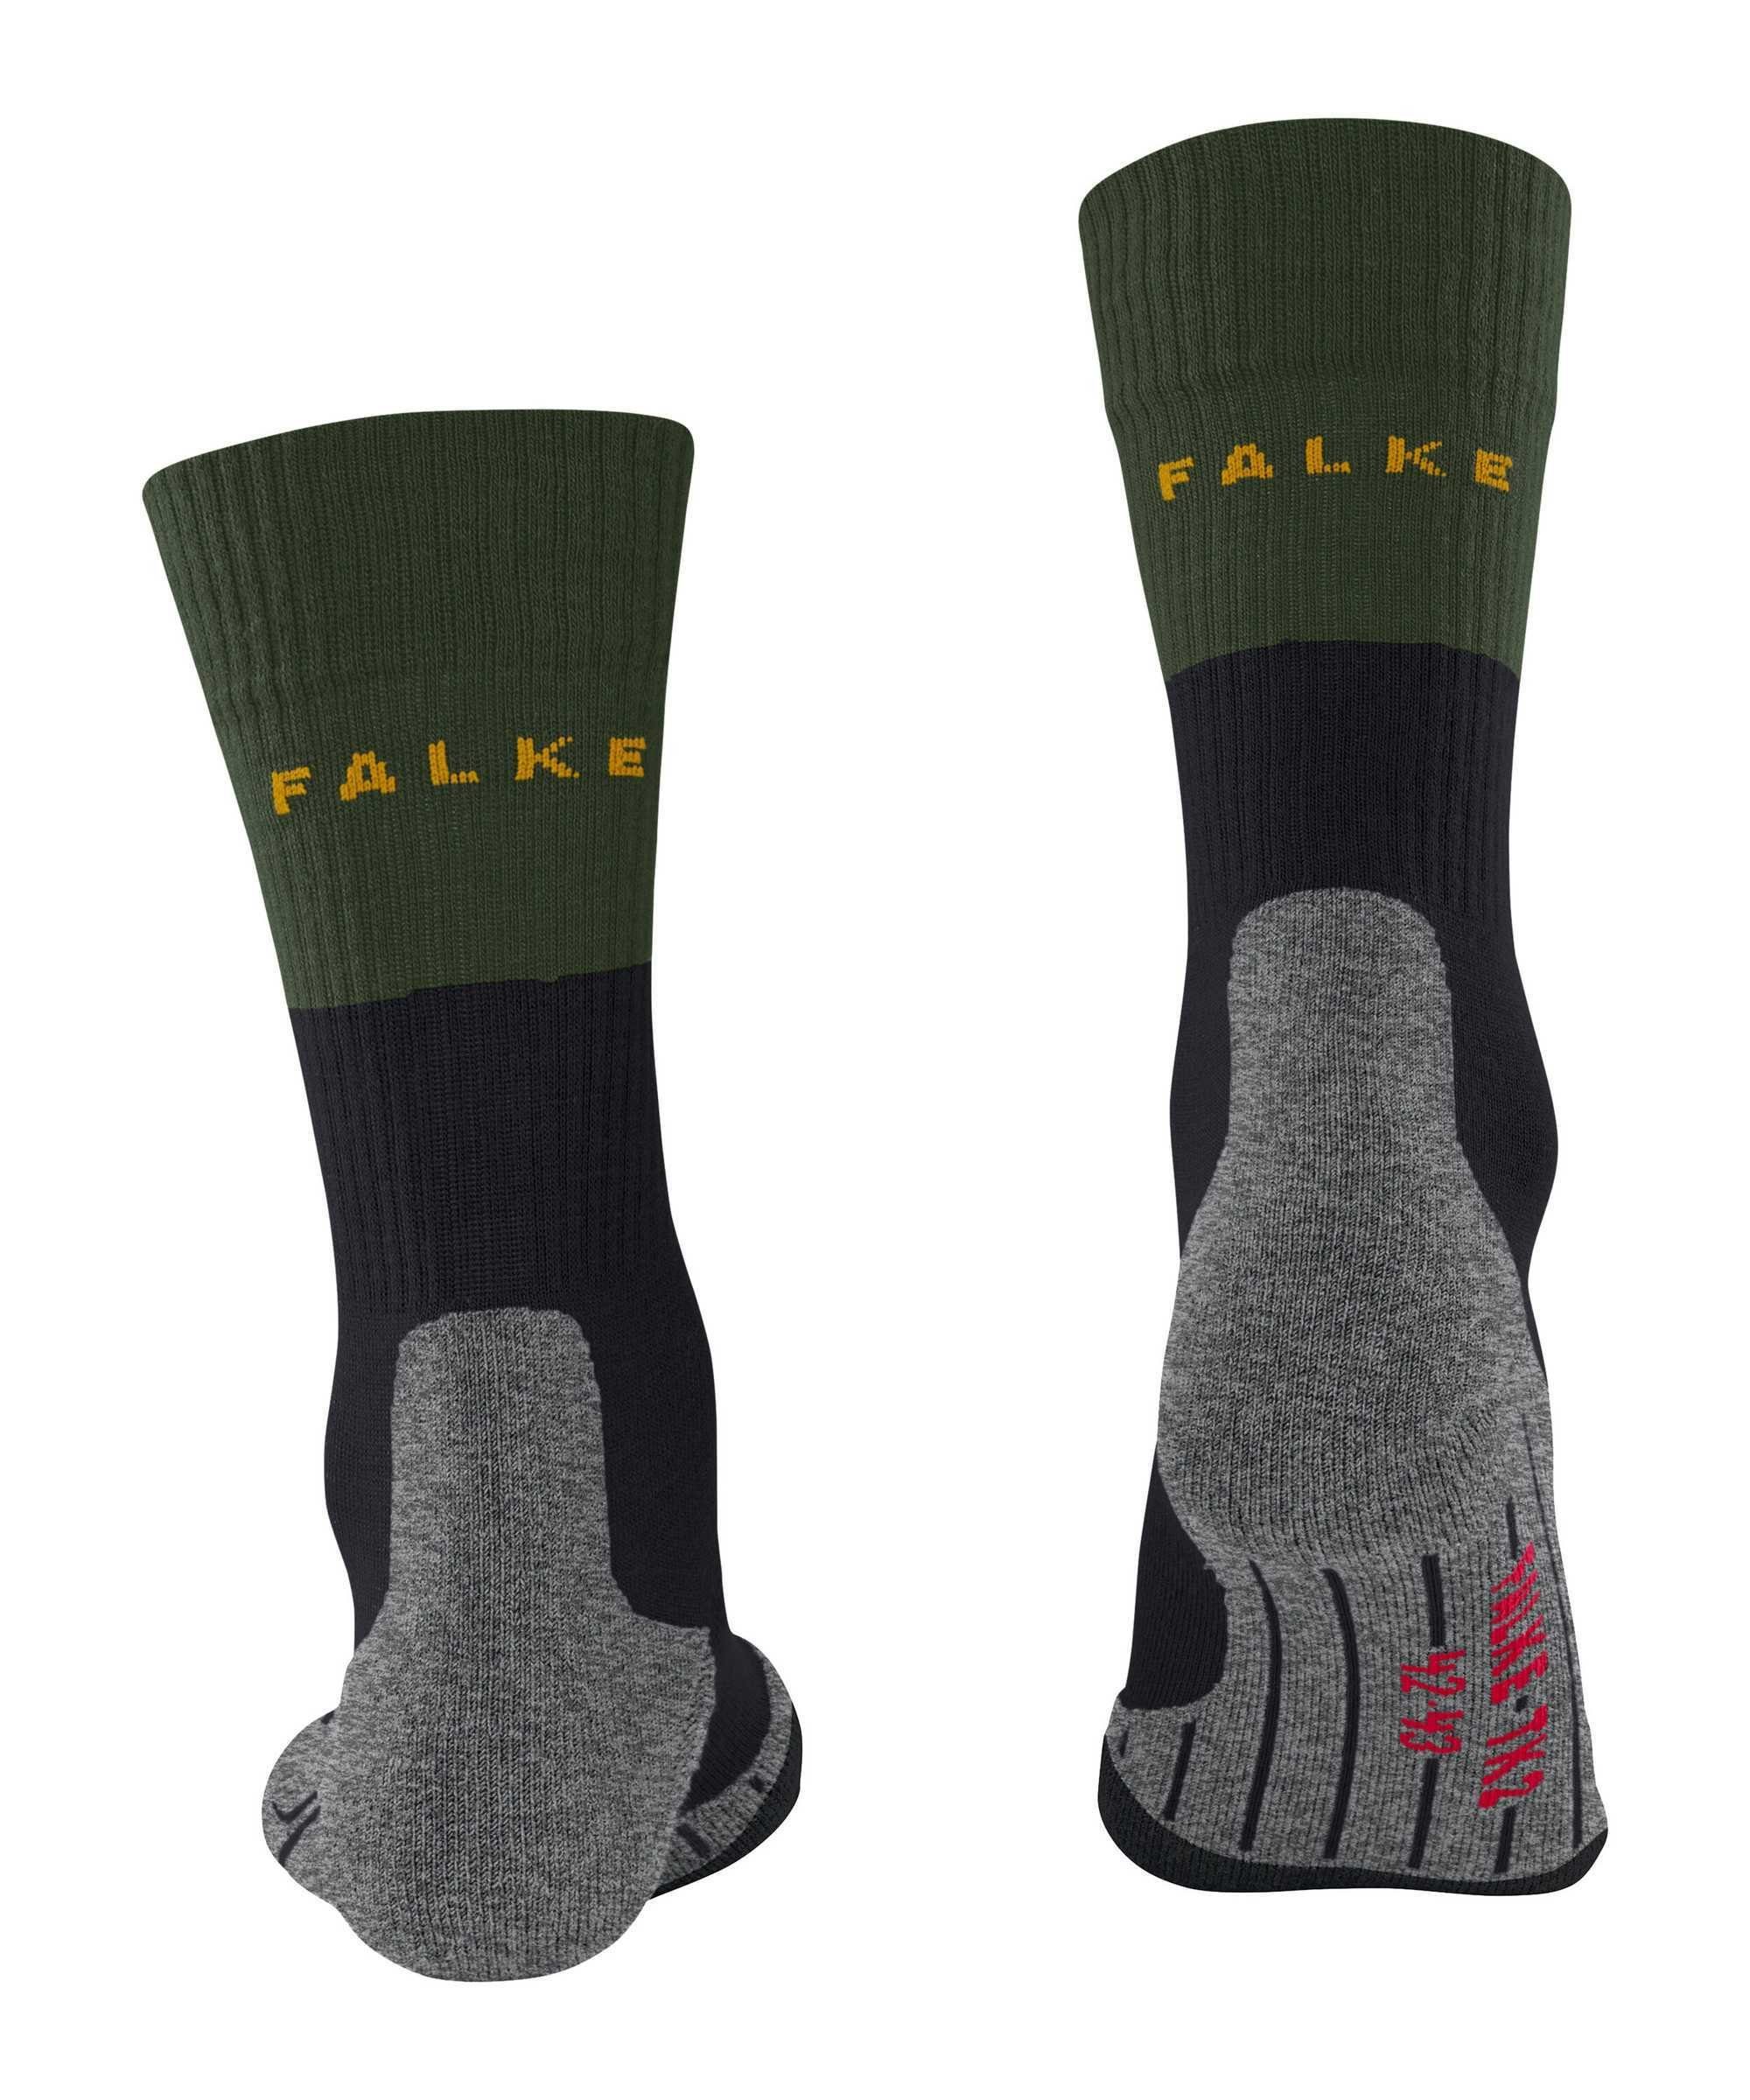 Herren (Vertigo) - Sportsocken TK2, Trekking Socken Polsterung Schwarz/Grau/Grün FALKE Socken